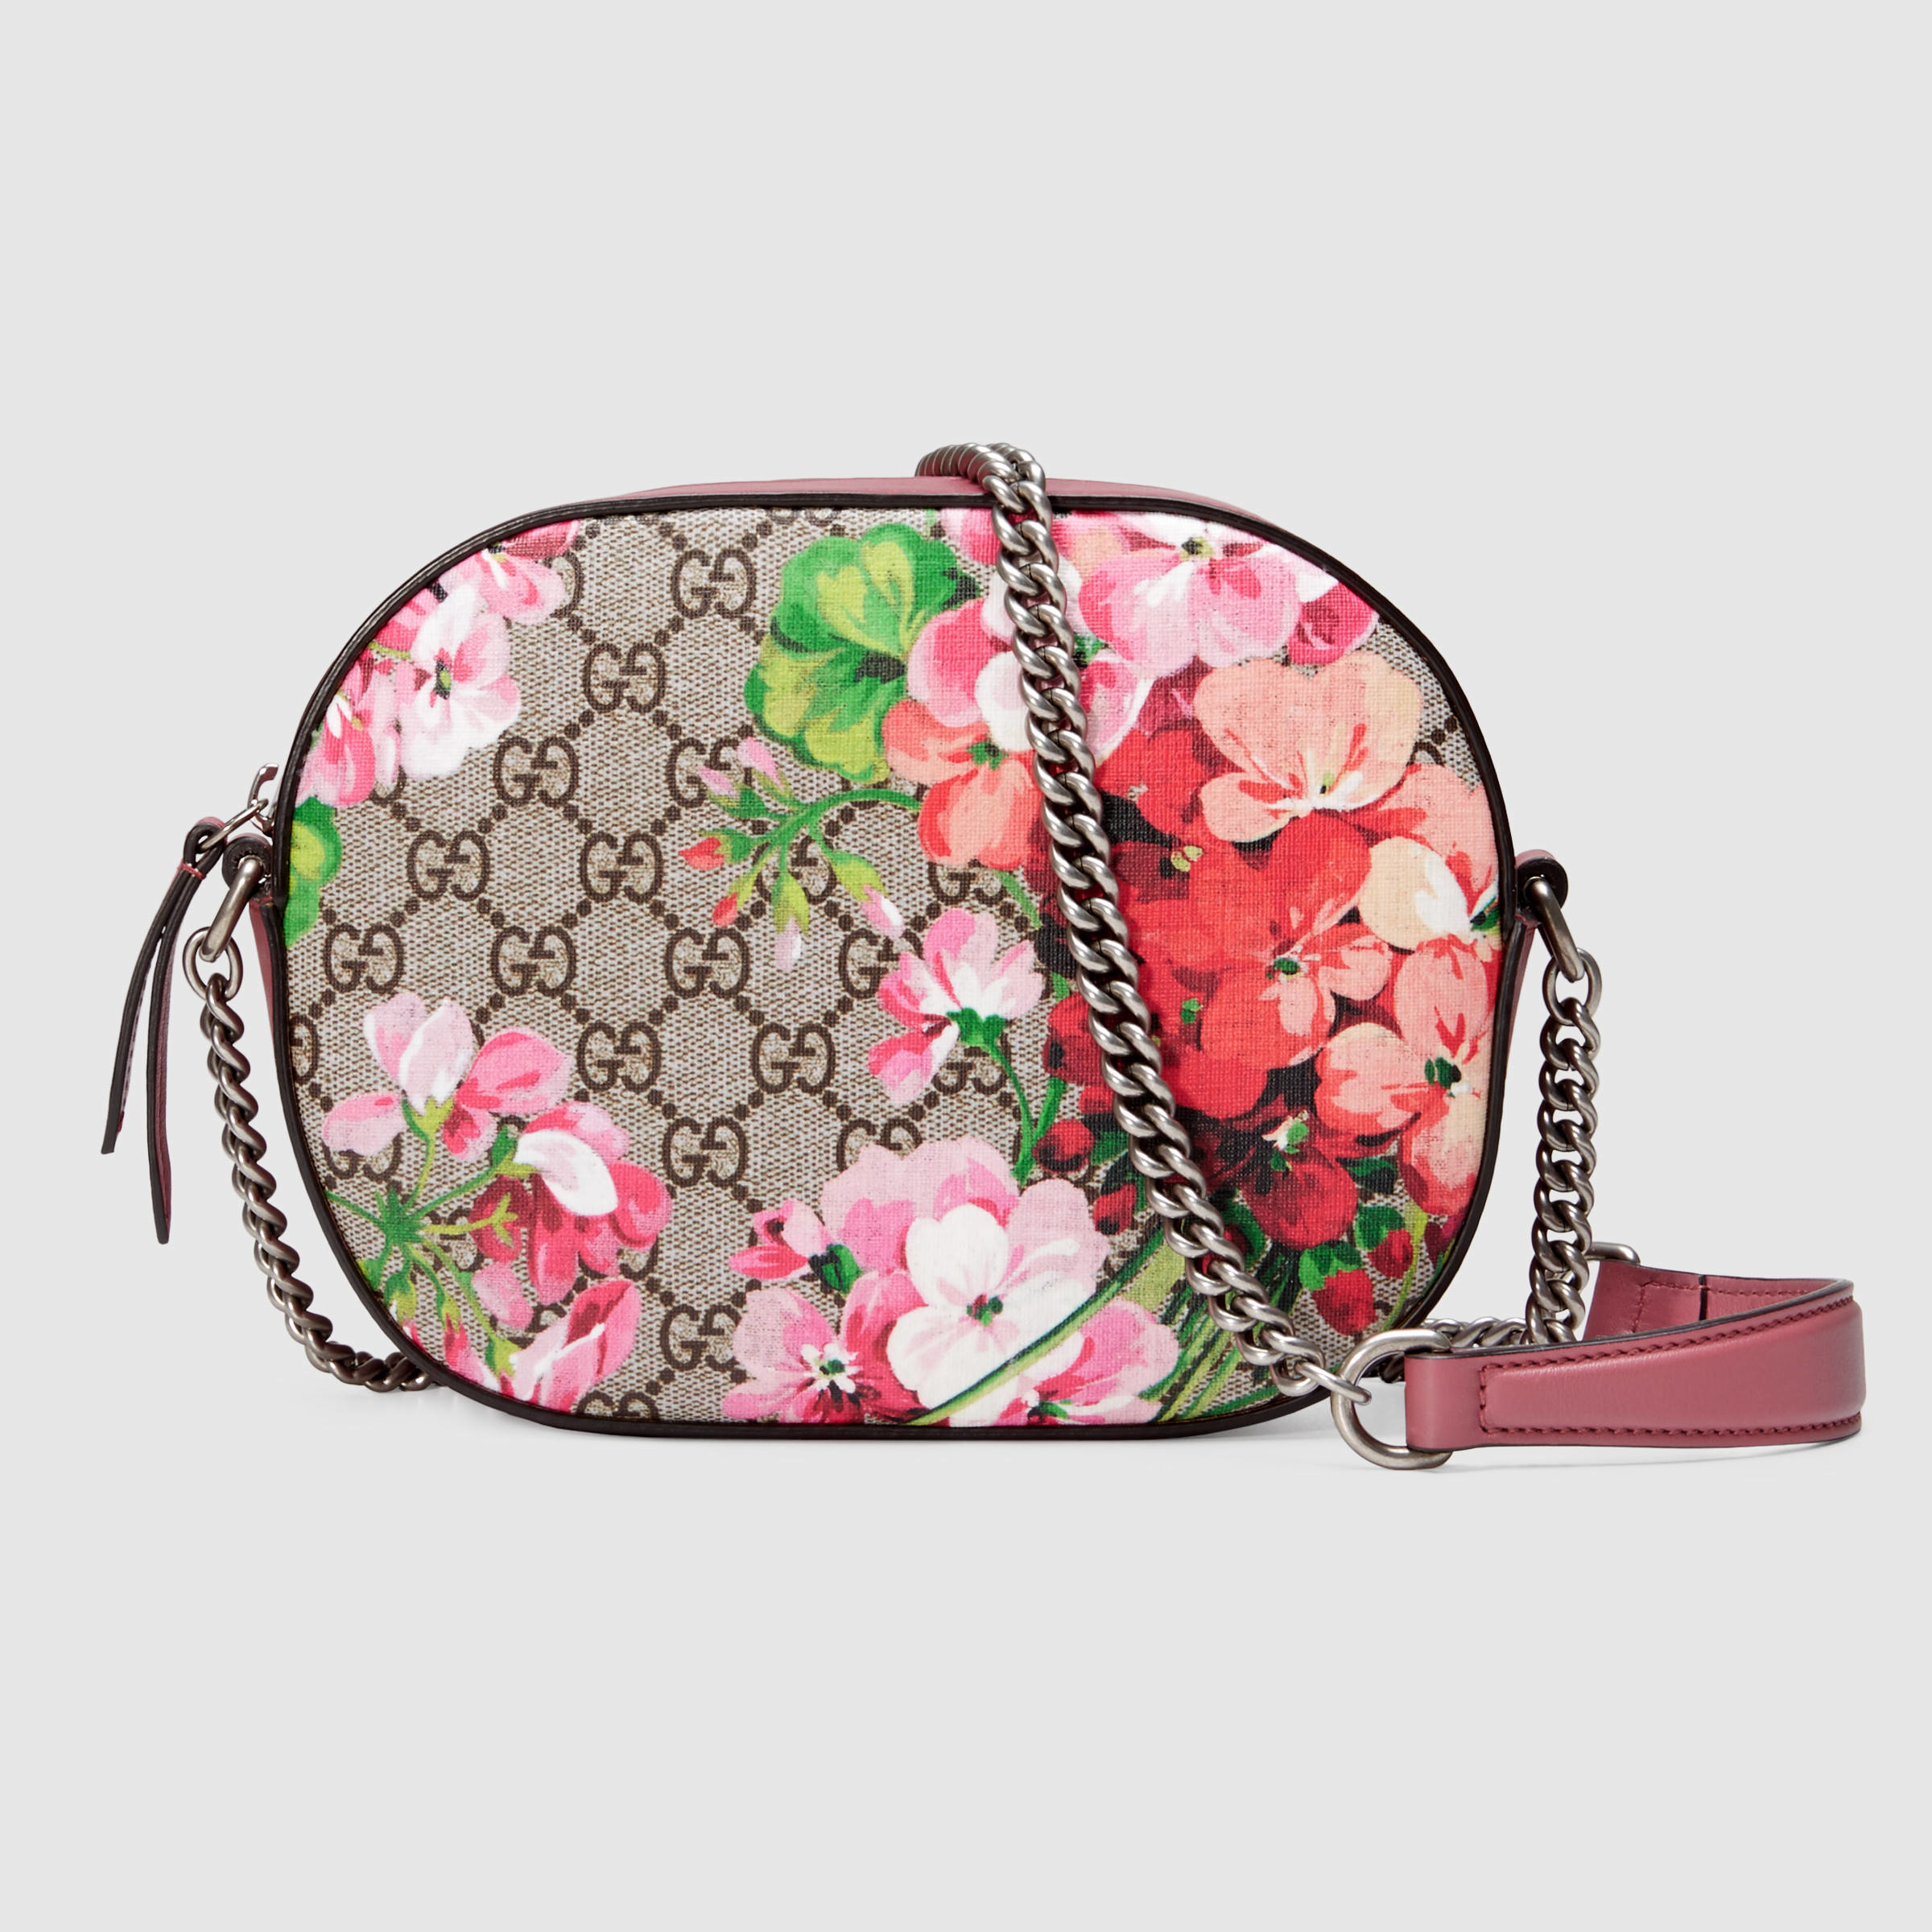 Lyst - Gucci Blooms GG Supreme Mini Chain Shoulder Bag